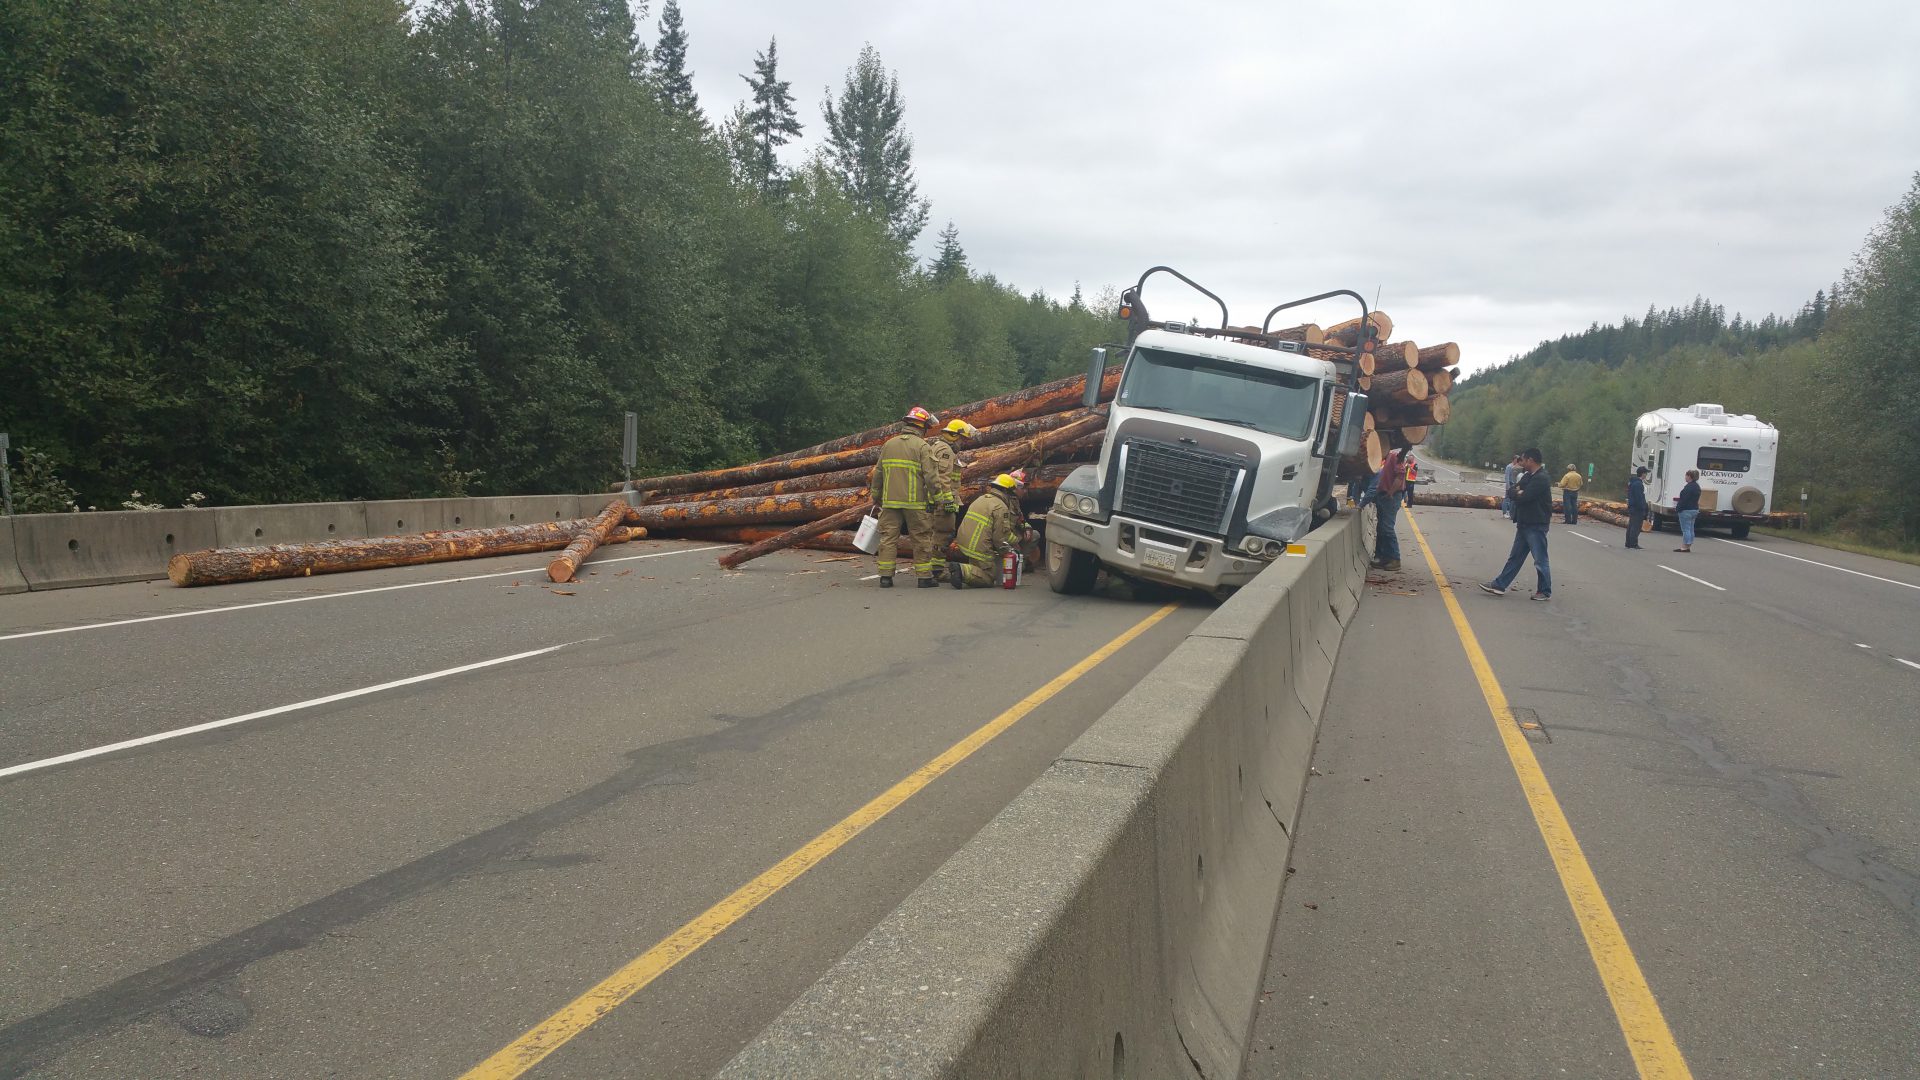 Logging crash on Island Highway